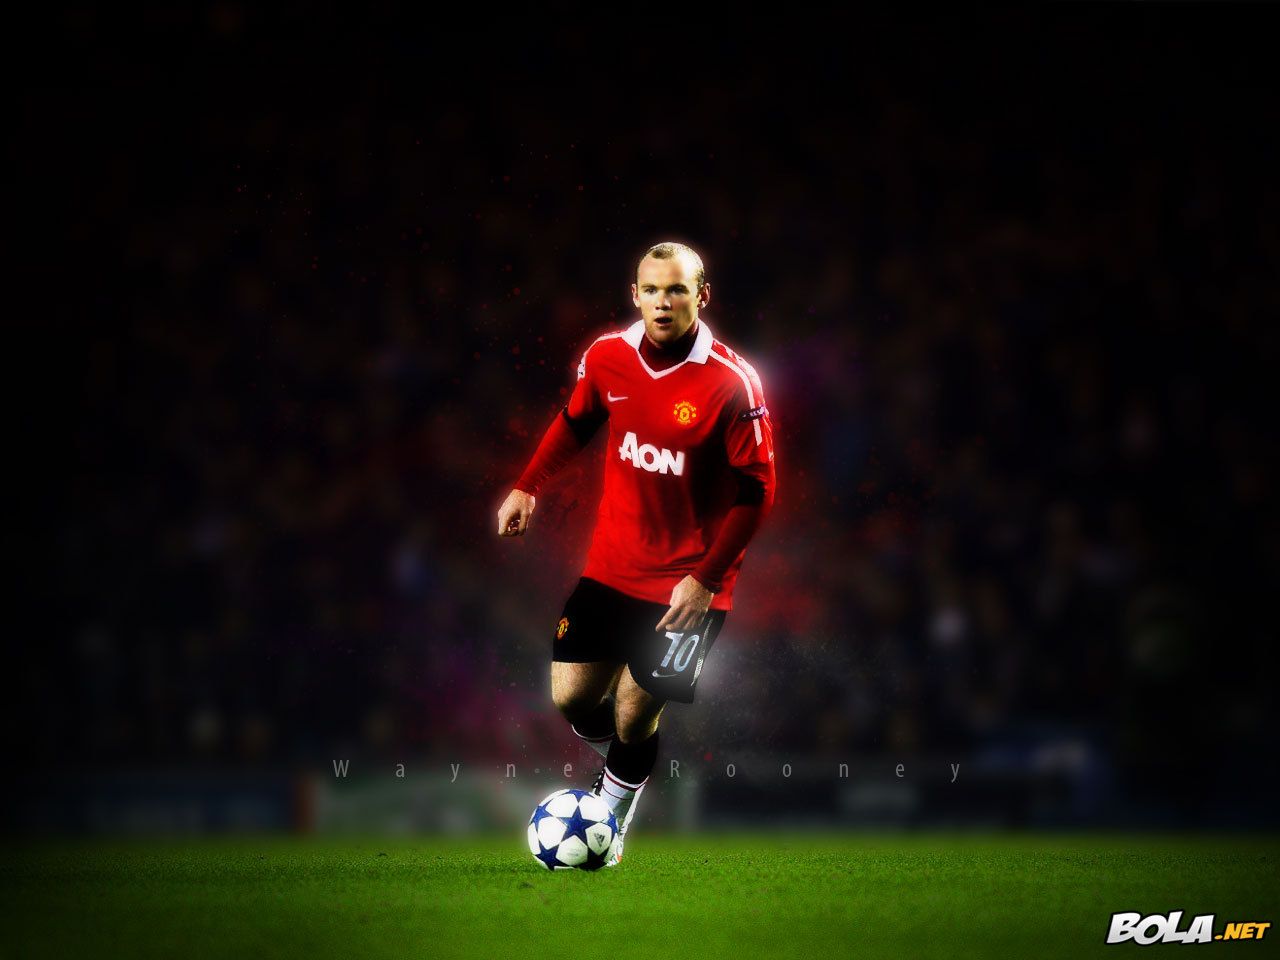 Wayne Rooney Wallpaper Player